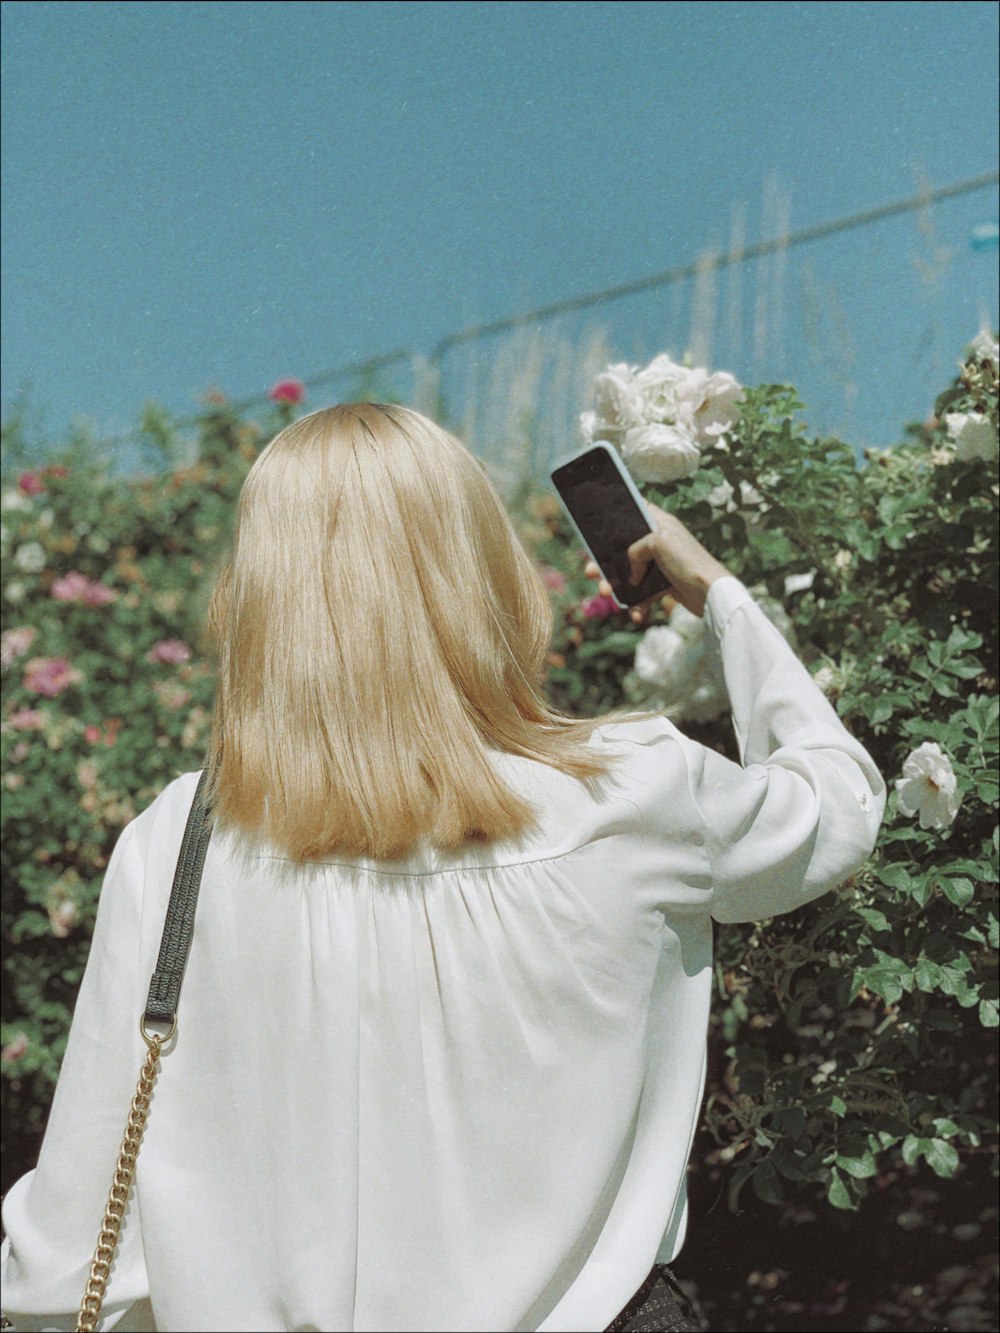 woman using smartphone near flowers